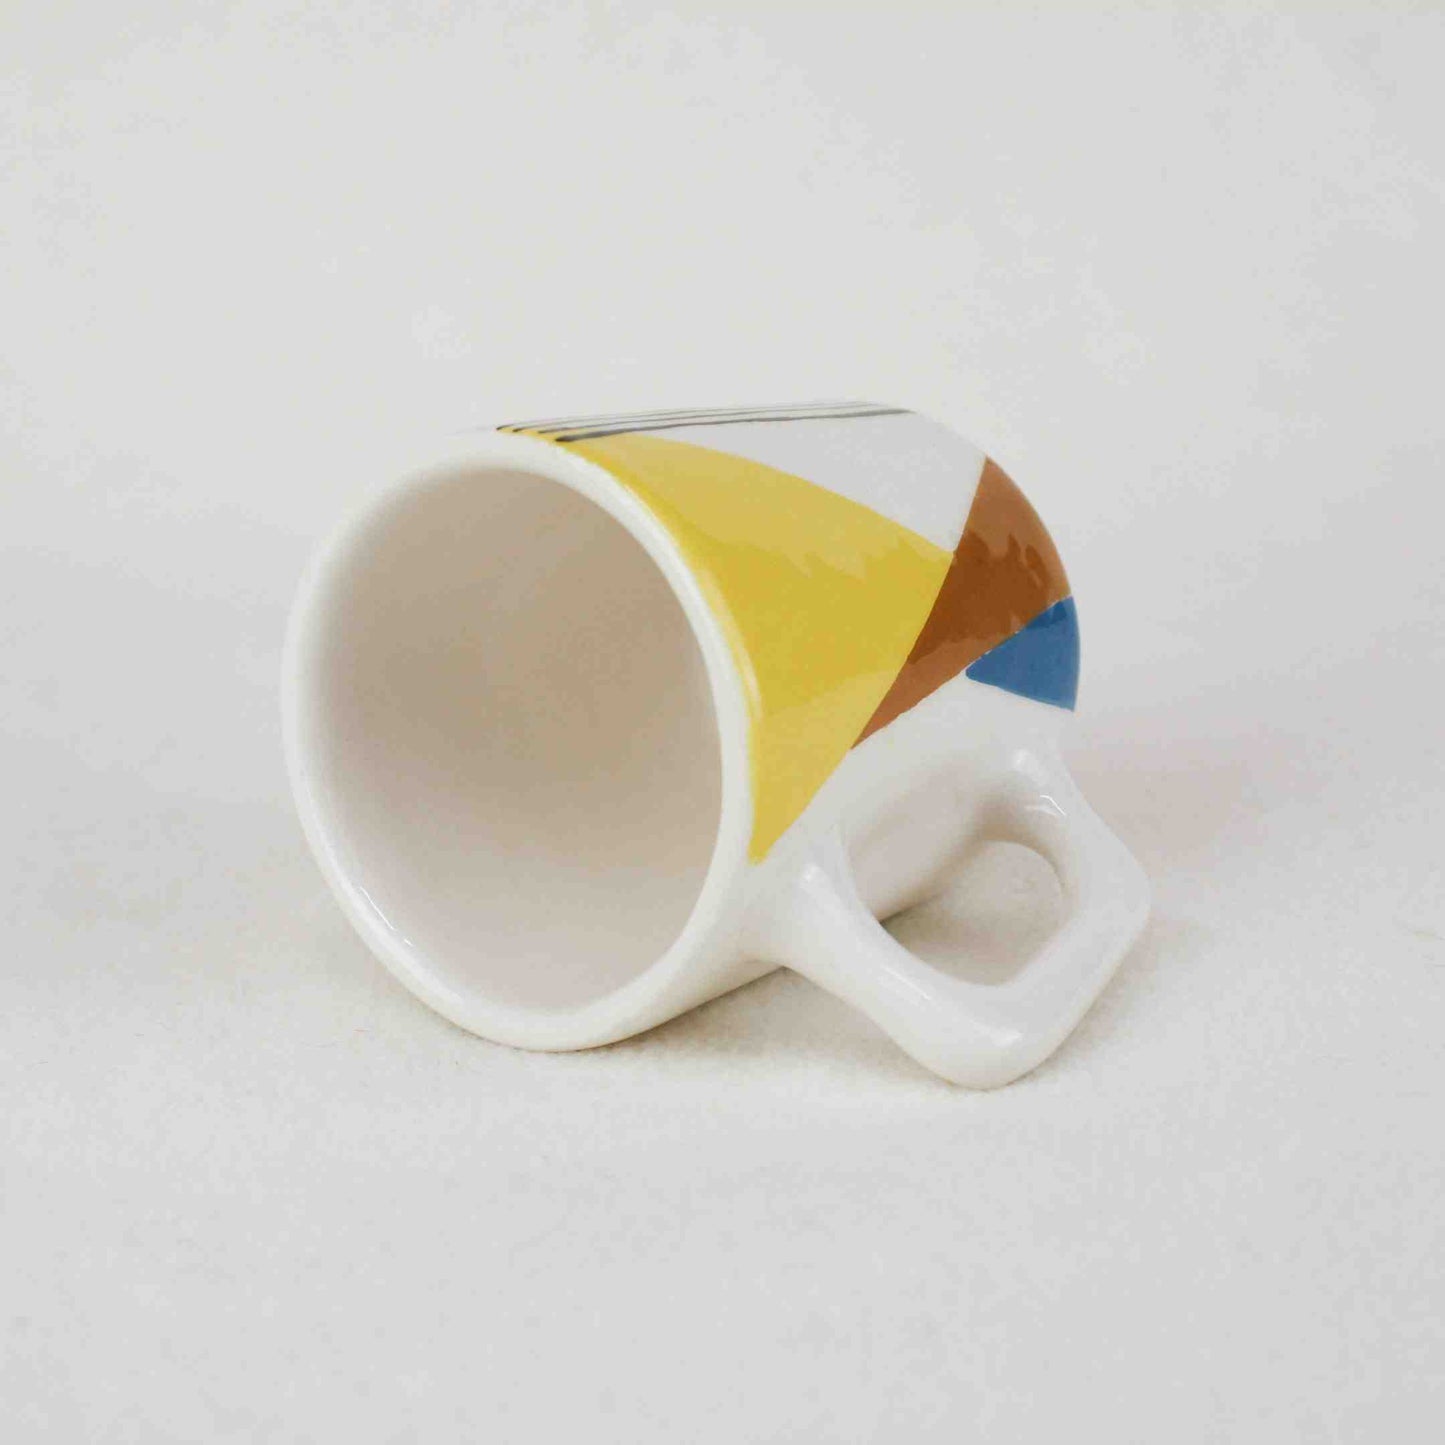 "Primal" Small Ceramic Mug, Design Ceramic Kitchenware